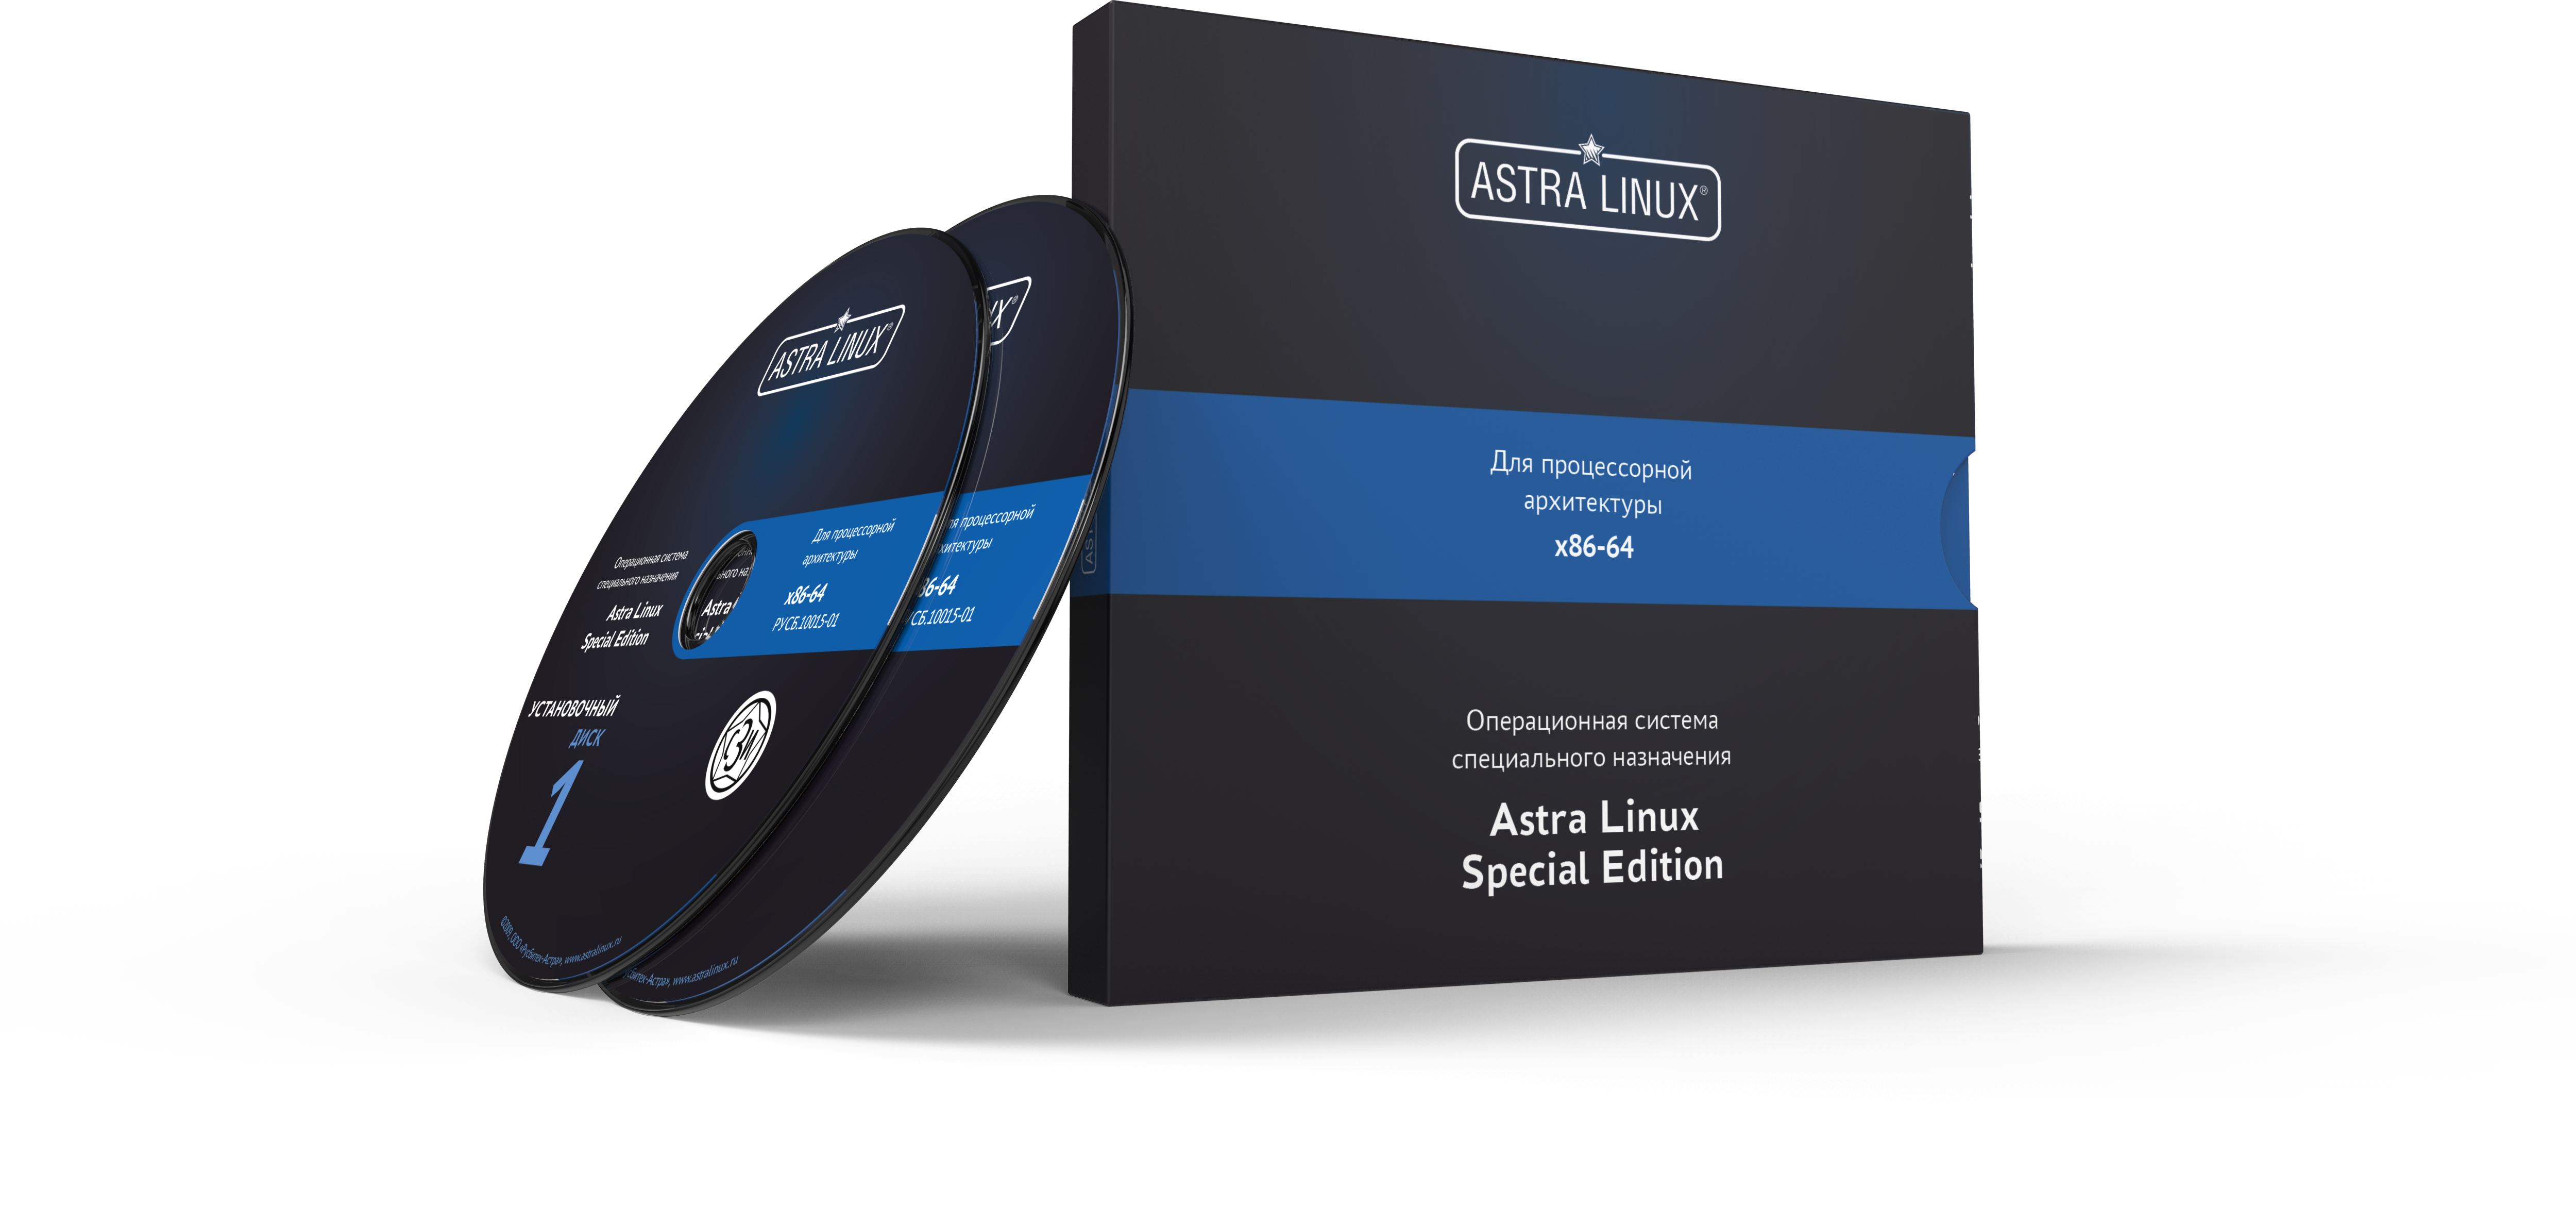 Astra Linux Special Edition 1.7 - Воронеж, для рабочей станции, "Усиленный", на 24 мес., ТП "Стандарт" на 24 мес.